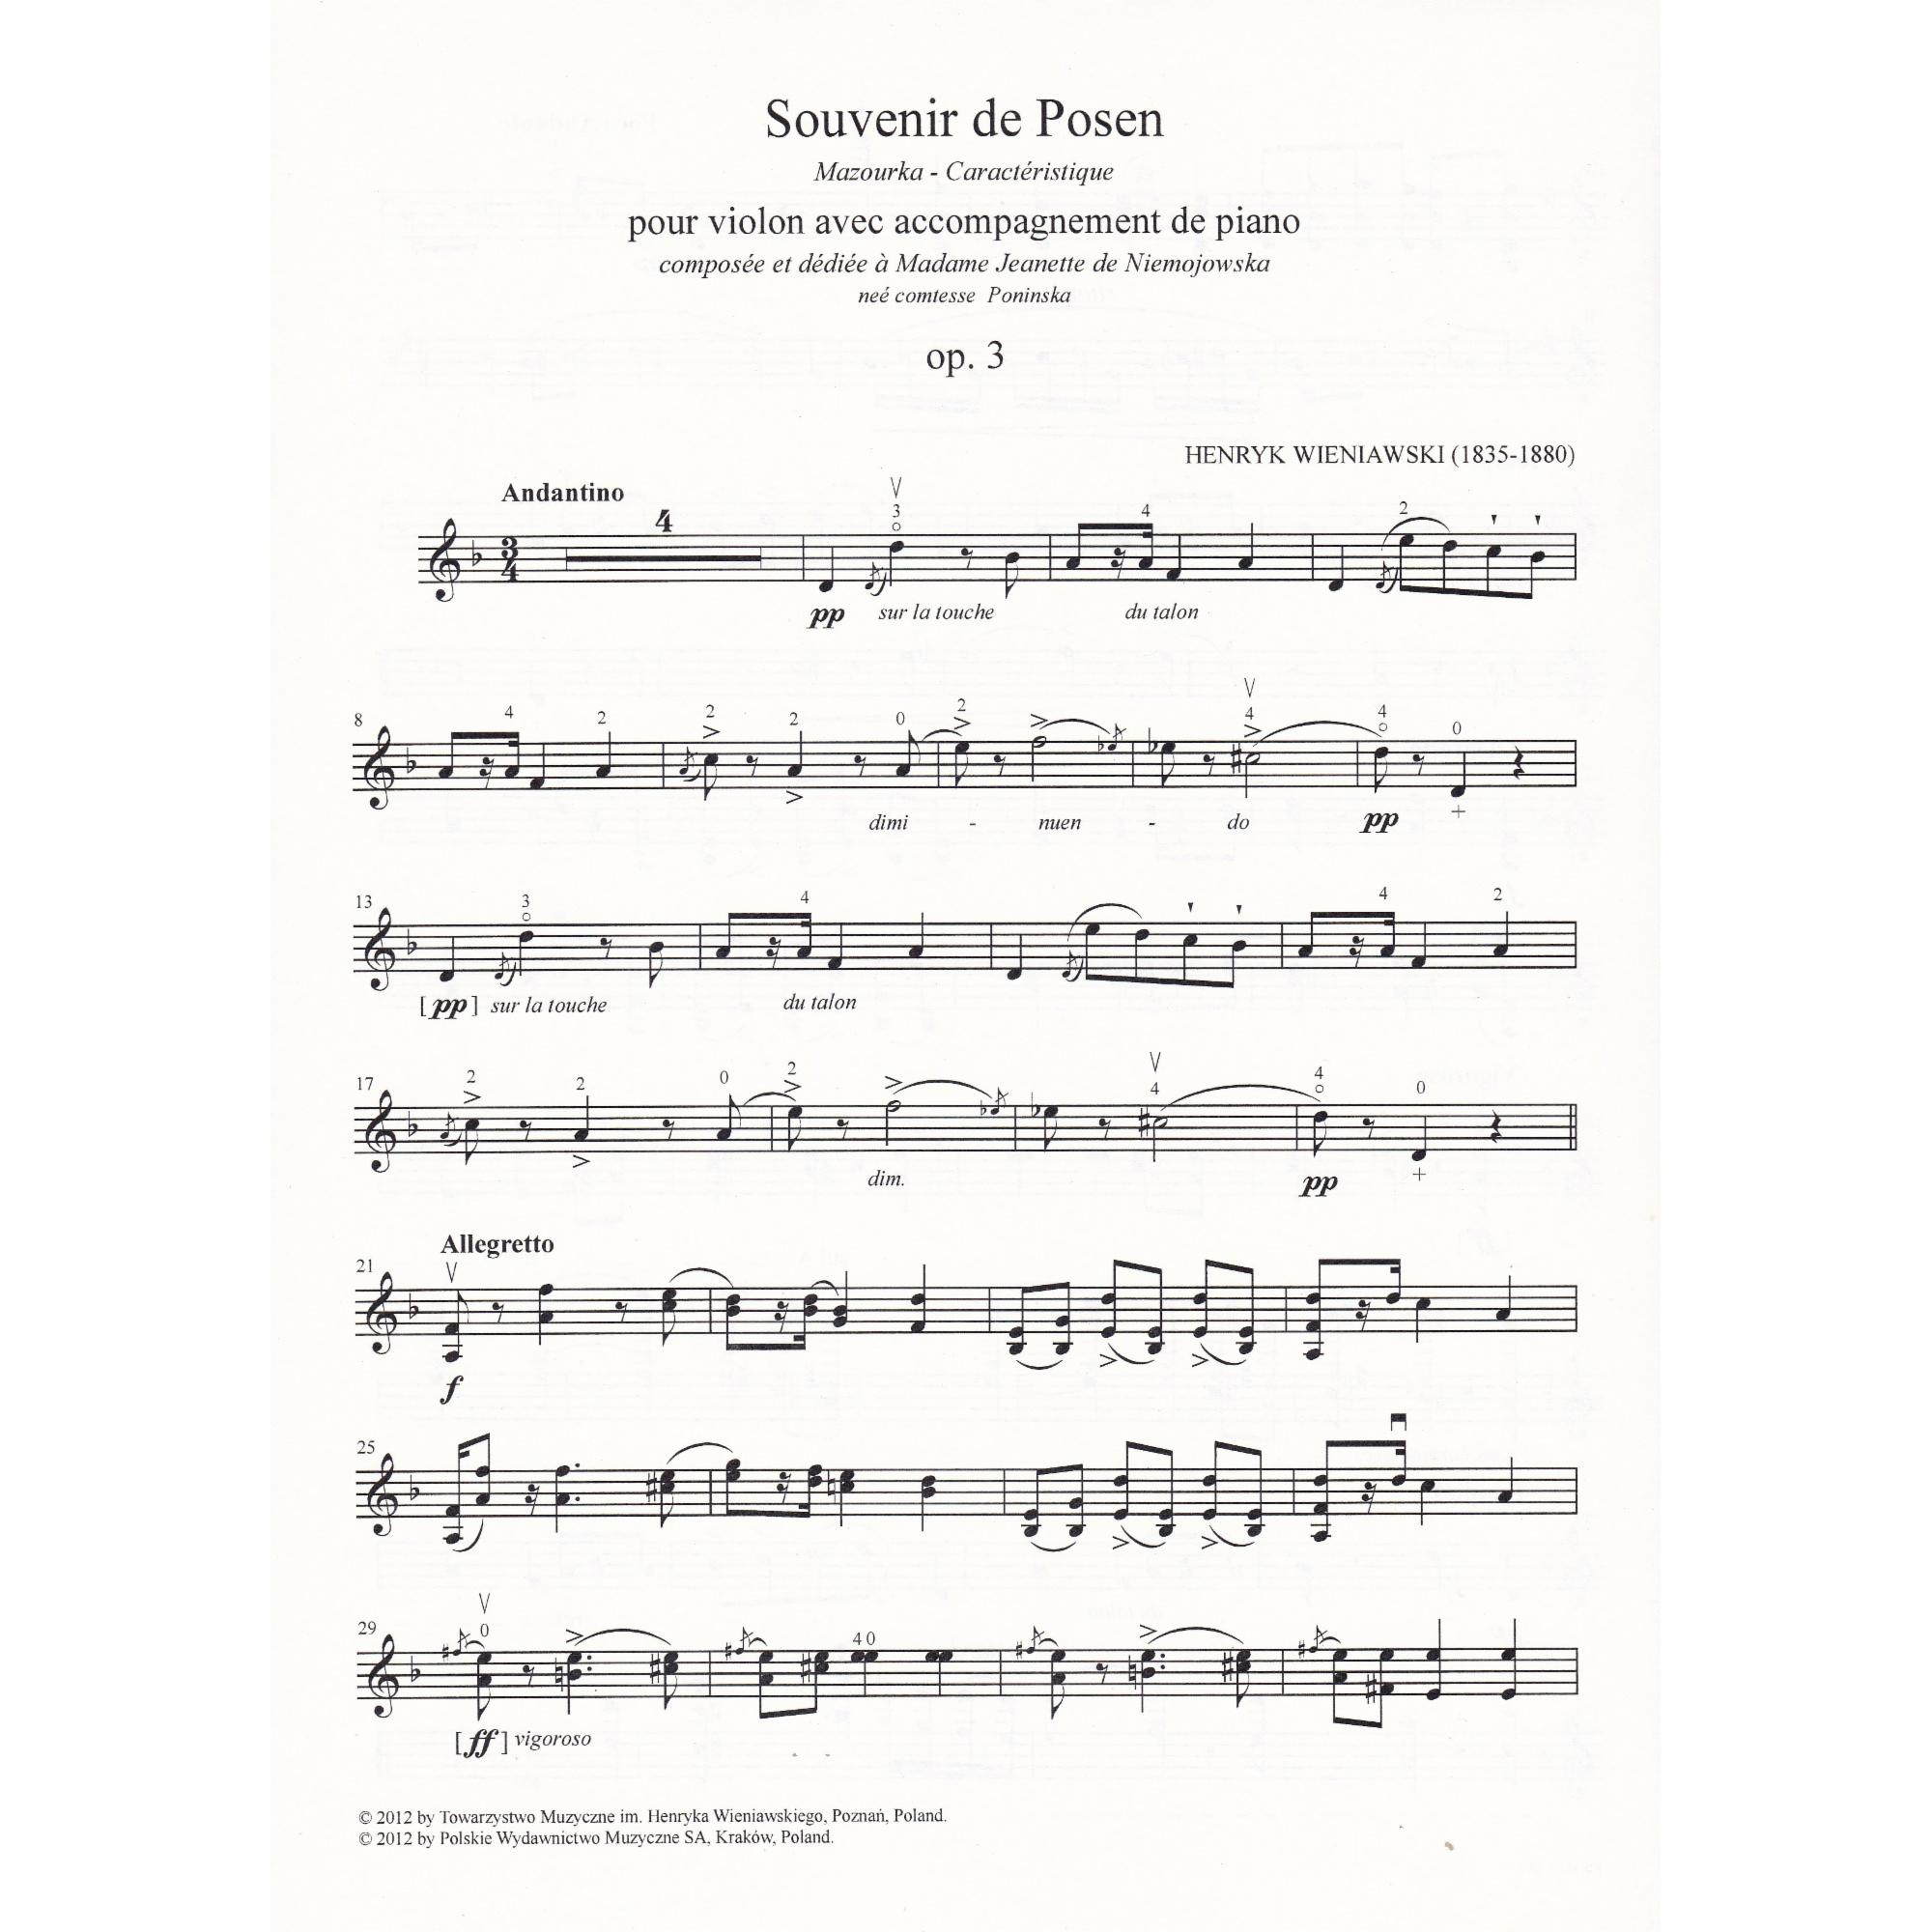 Souvenir de Posen for Violin and Piano, Op. 3